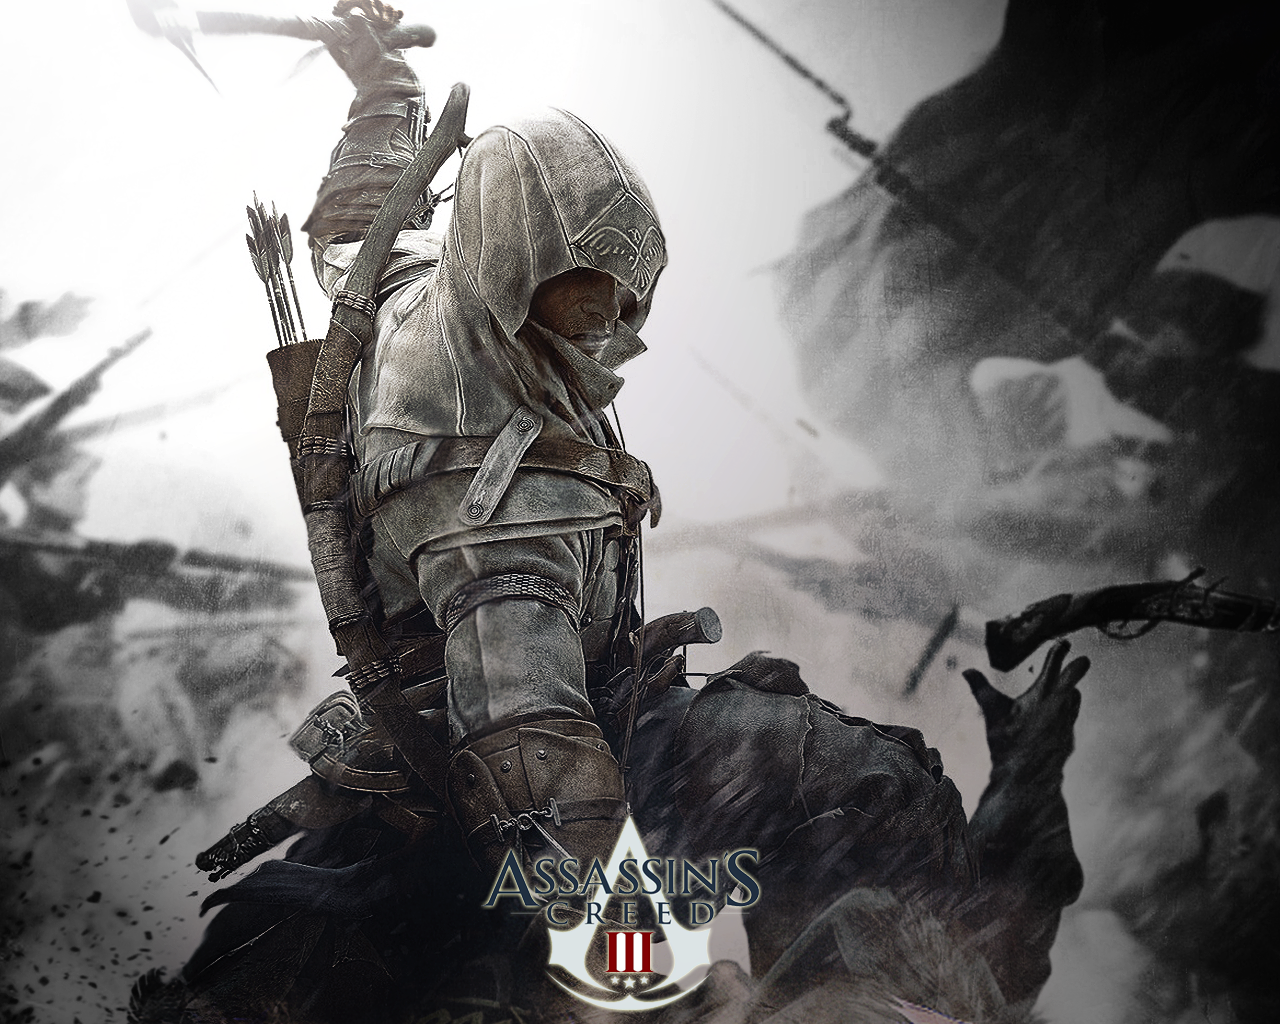 Assassin's Creed III Wallpaper by SavageNeme on DeviantArt